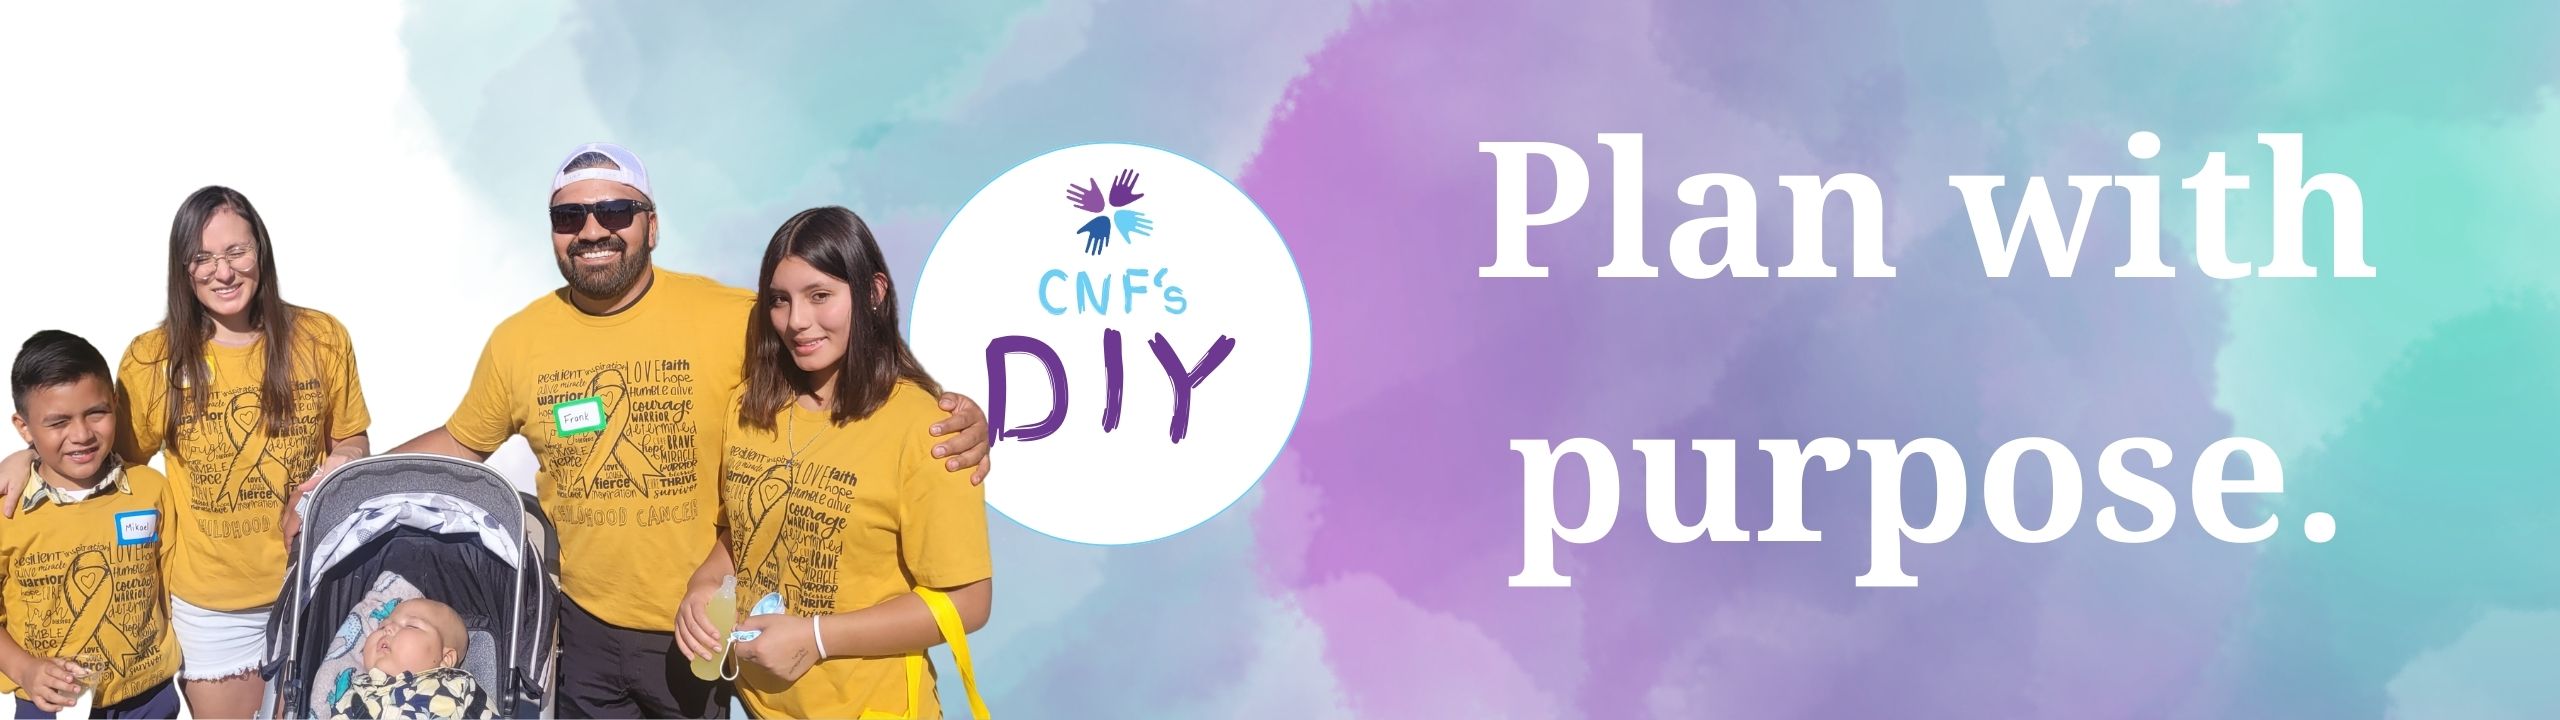 Child Neurology Foundation Plan with Purpose DIY (2)